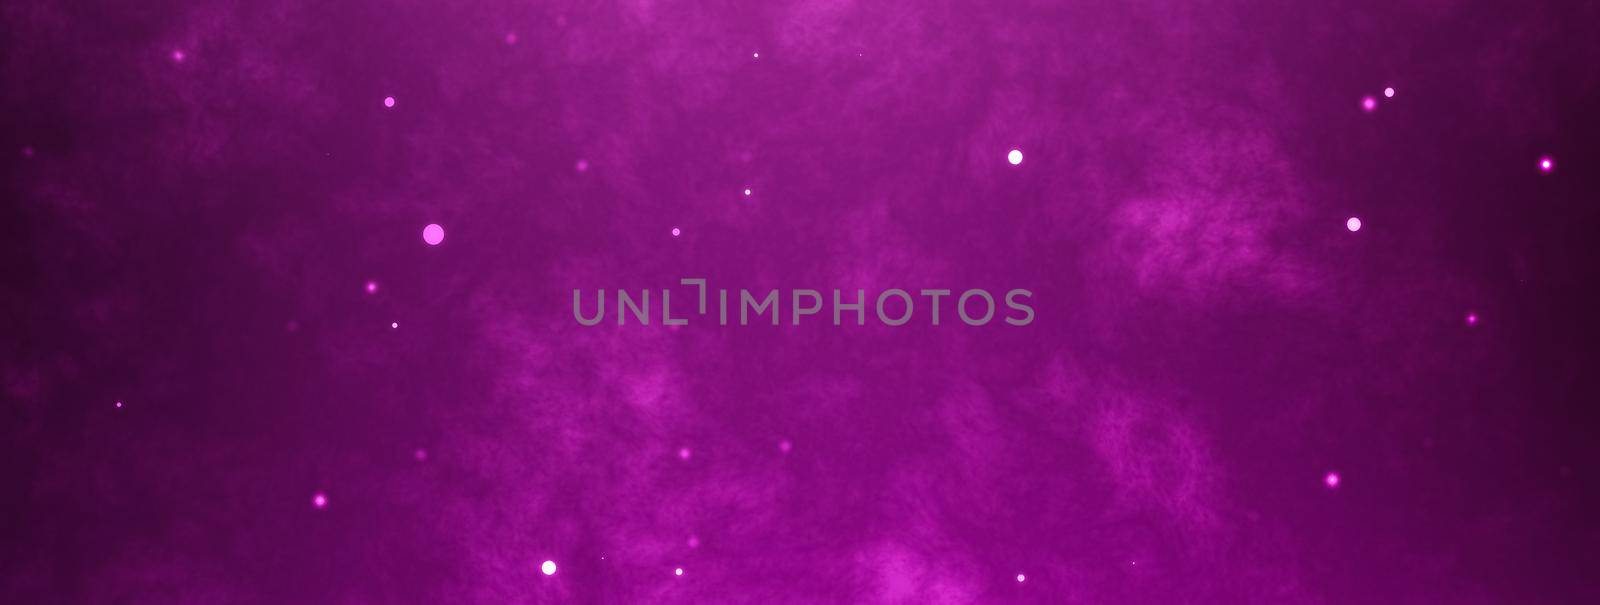 Pink festive horizontal background. Flying little sparkles on the glamorous backdrop